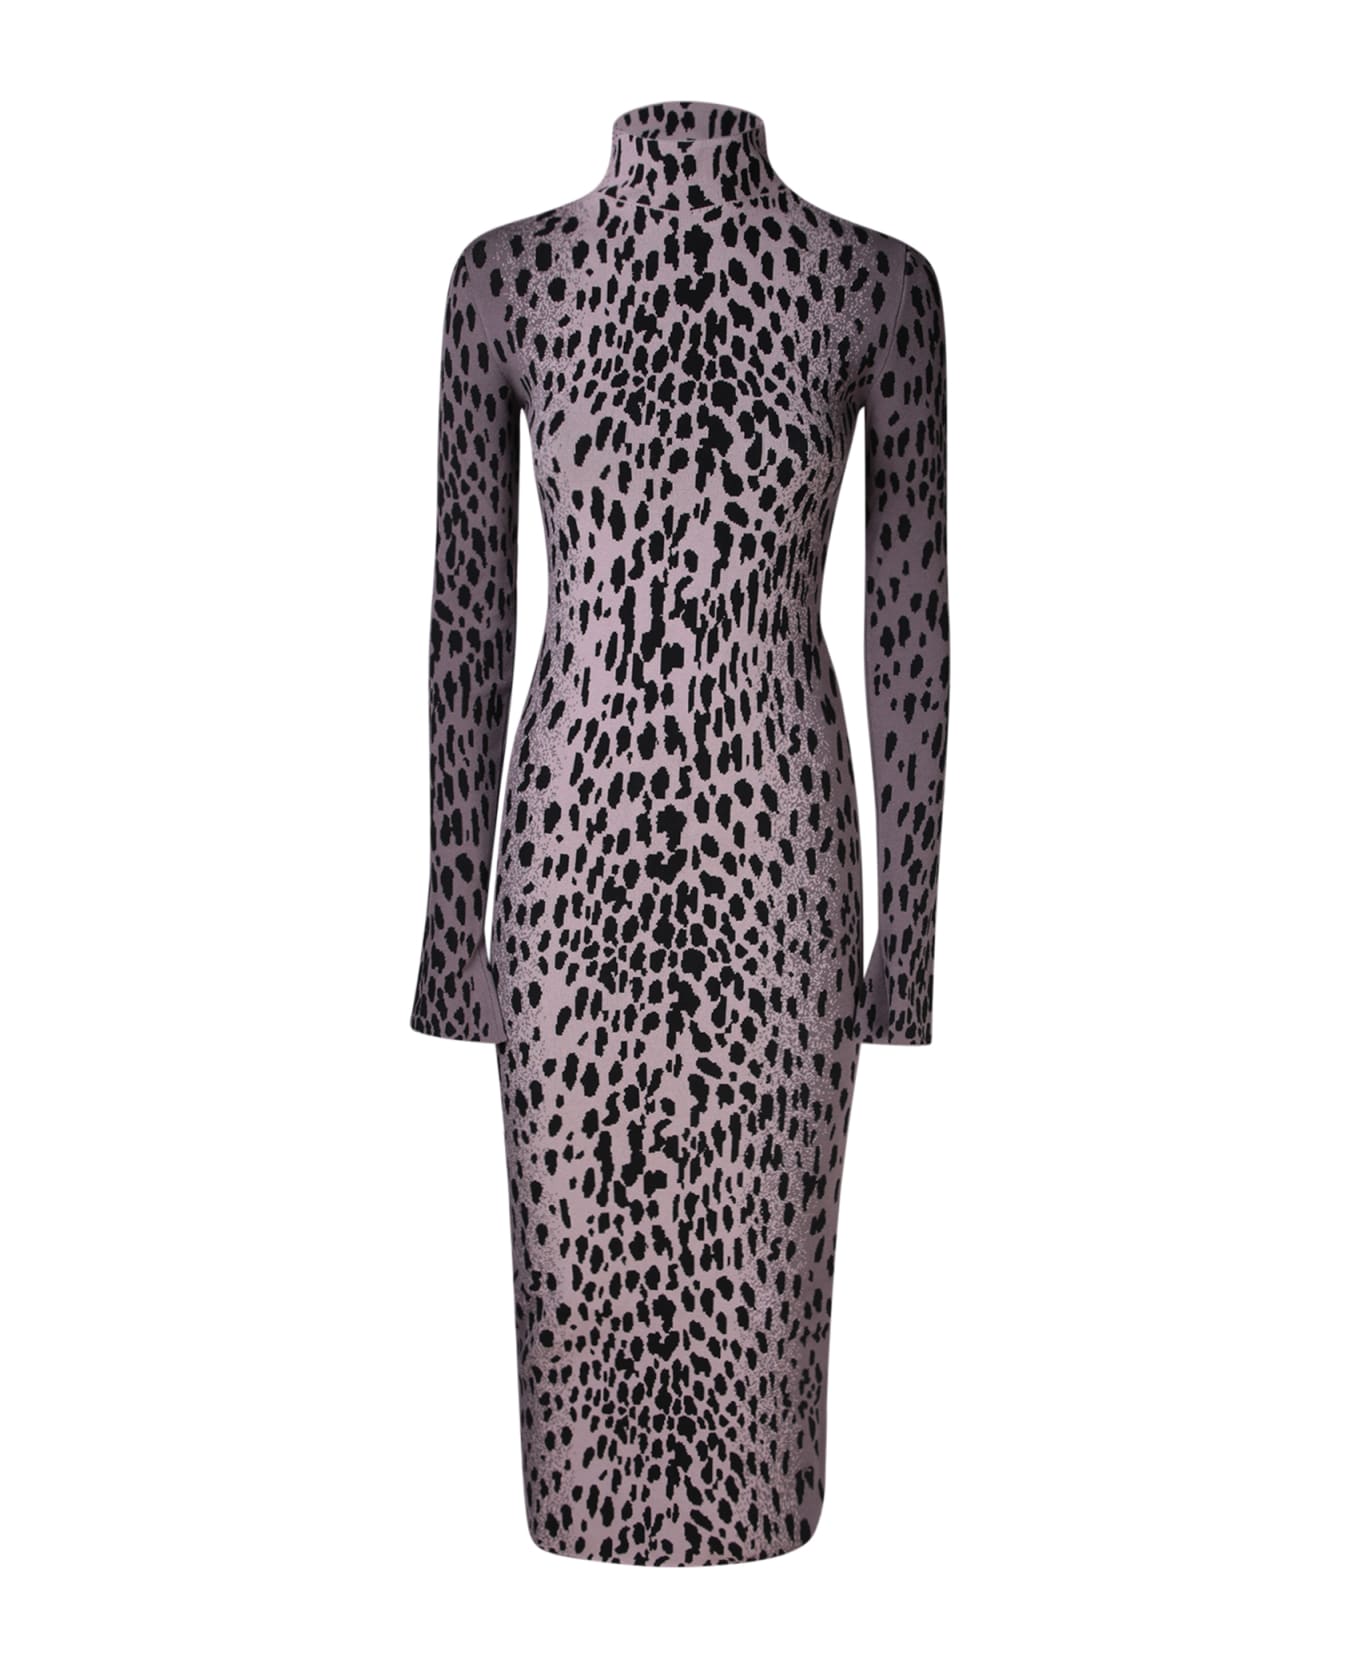 SSHEENA Long Leopard Knit Dress Lilac And Black - Multi